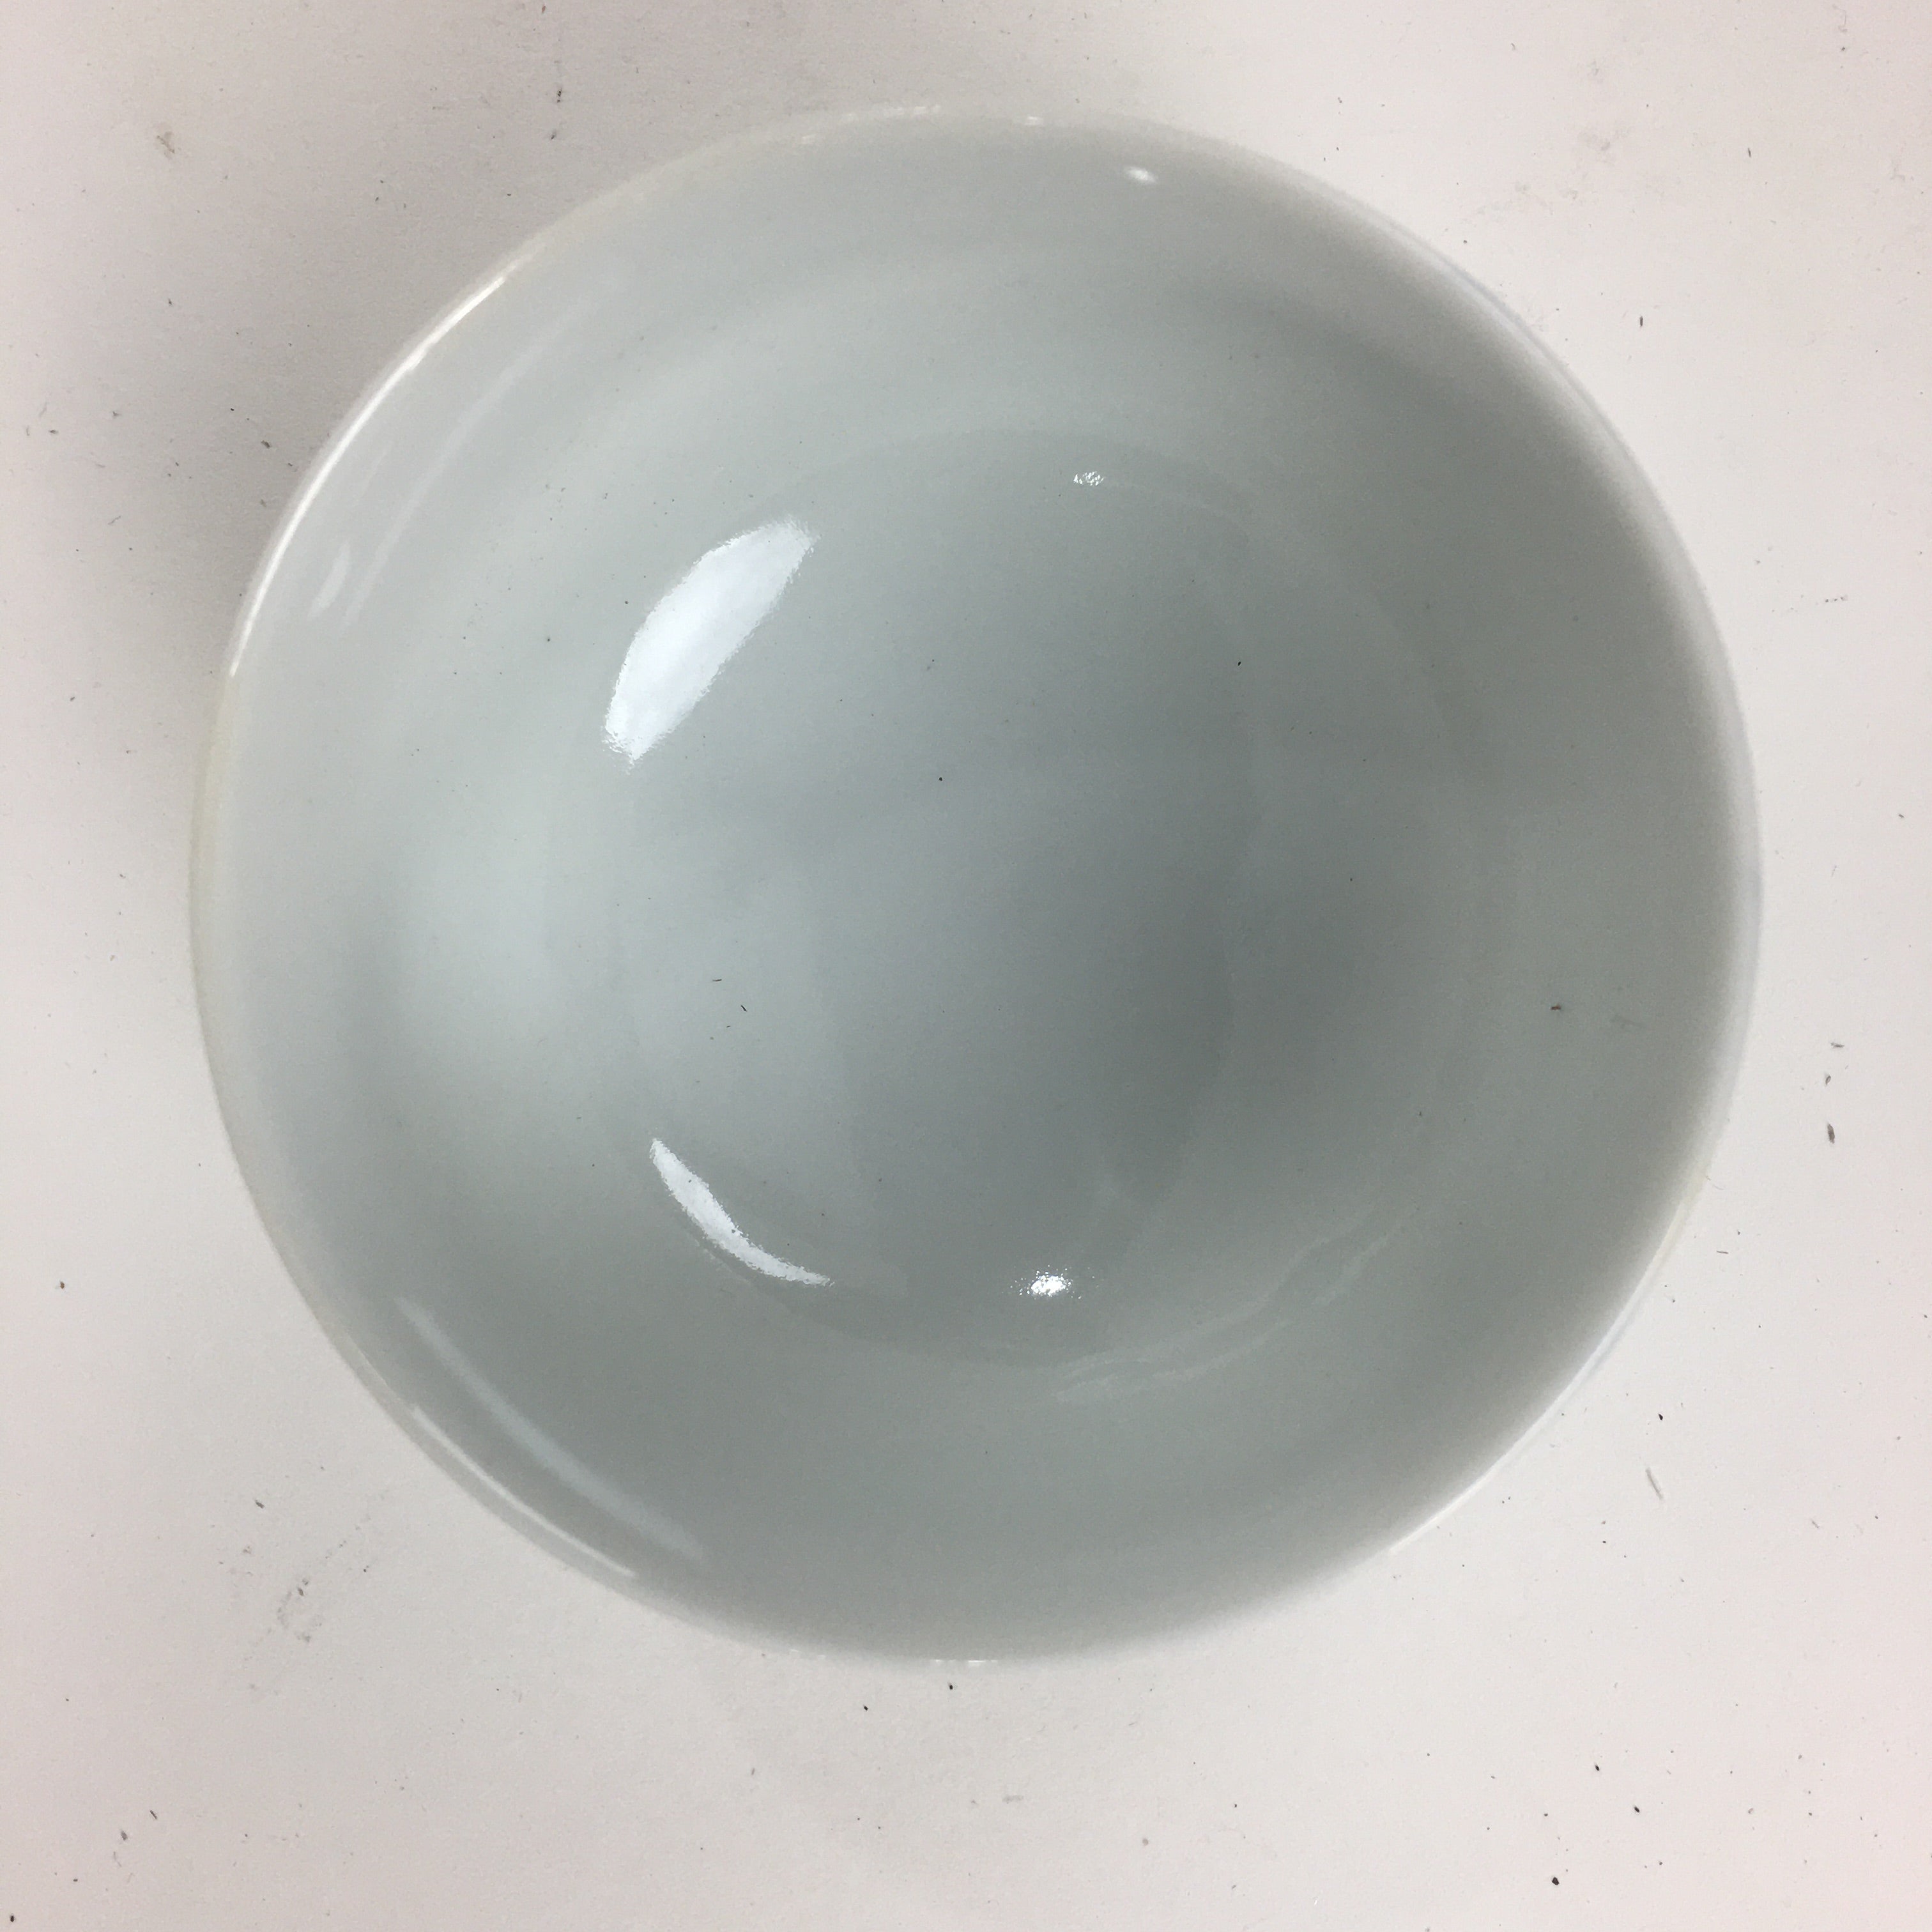 Japanese Porcelain Tea Set Arita ware Cup Pot Vtg Yunomi Kyusu Sencha PX573